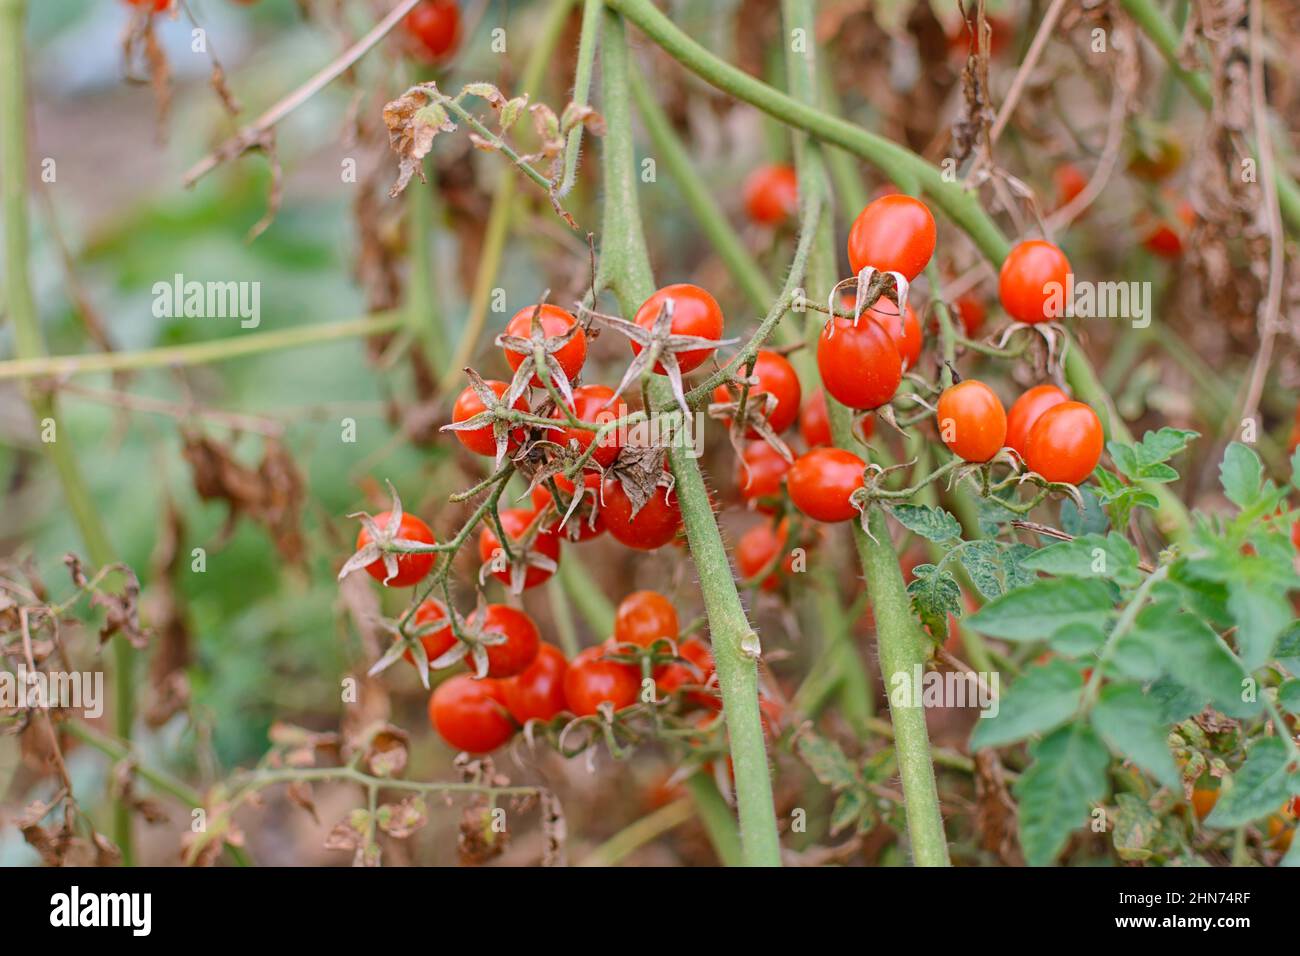 The fruit of Baby tomato, Cherry tomato (Lycopersicon esculentum) in the greenhouse Stock Photo